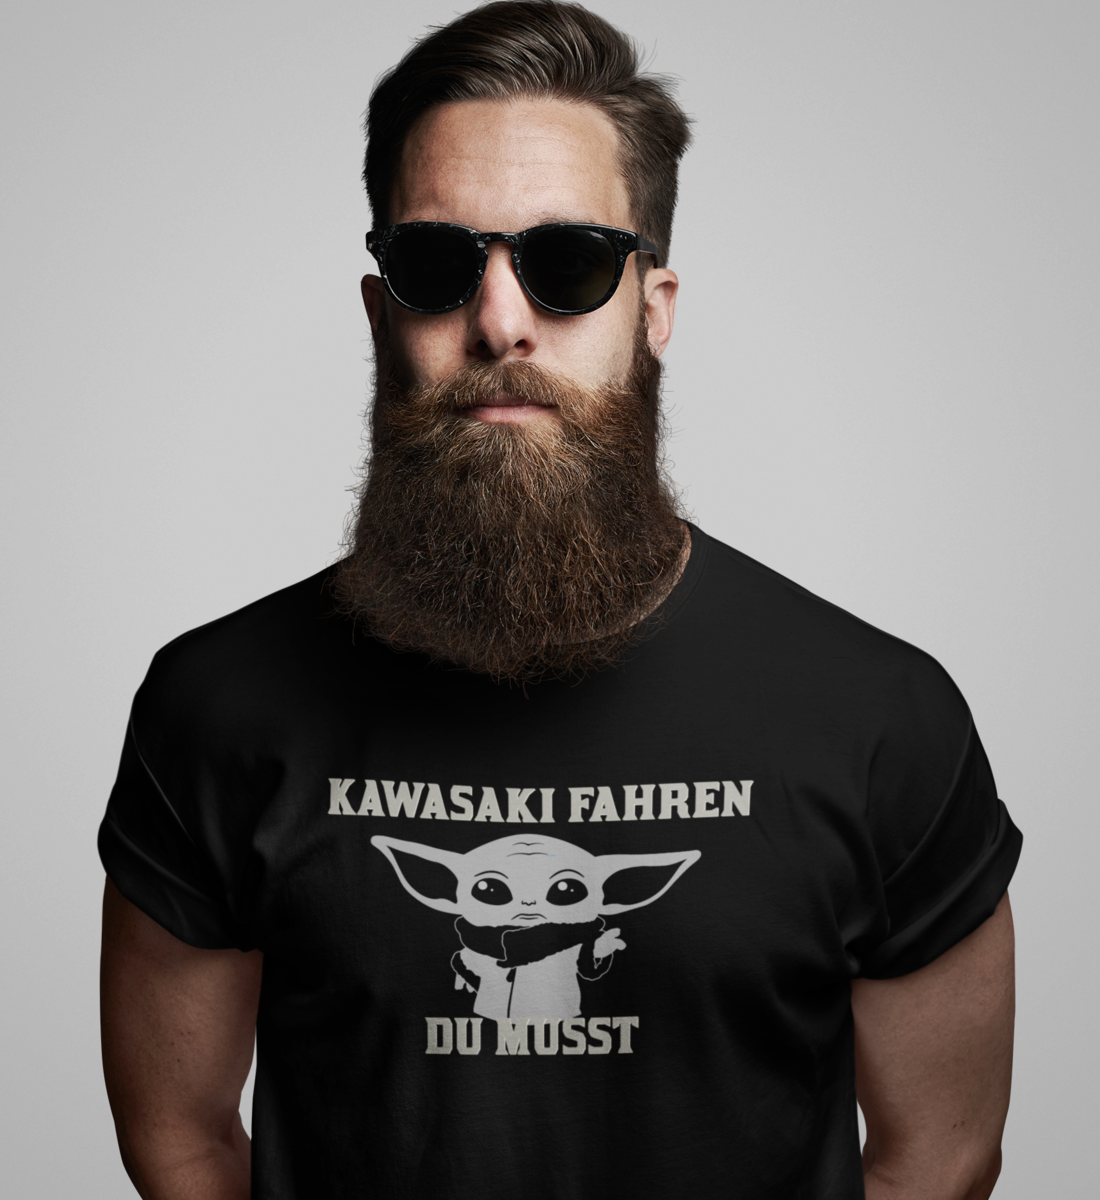 Kawasaki fahren du musst - Herren T-Shirt